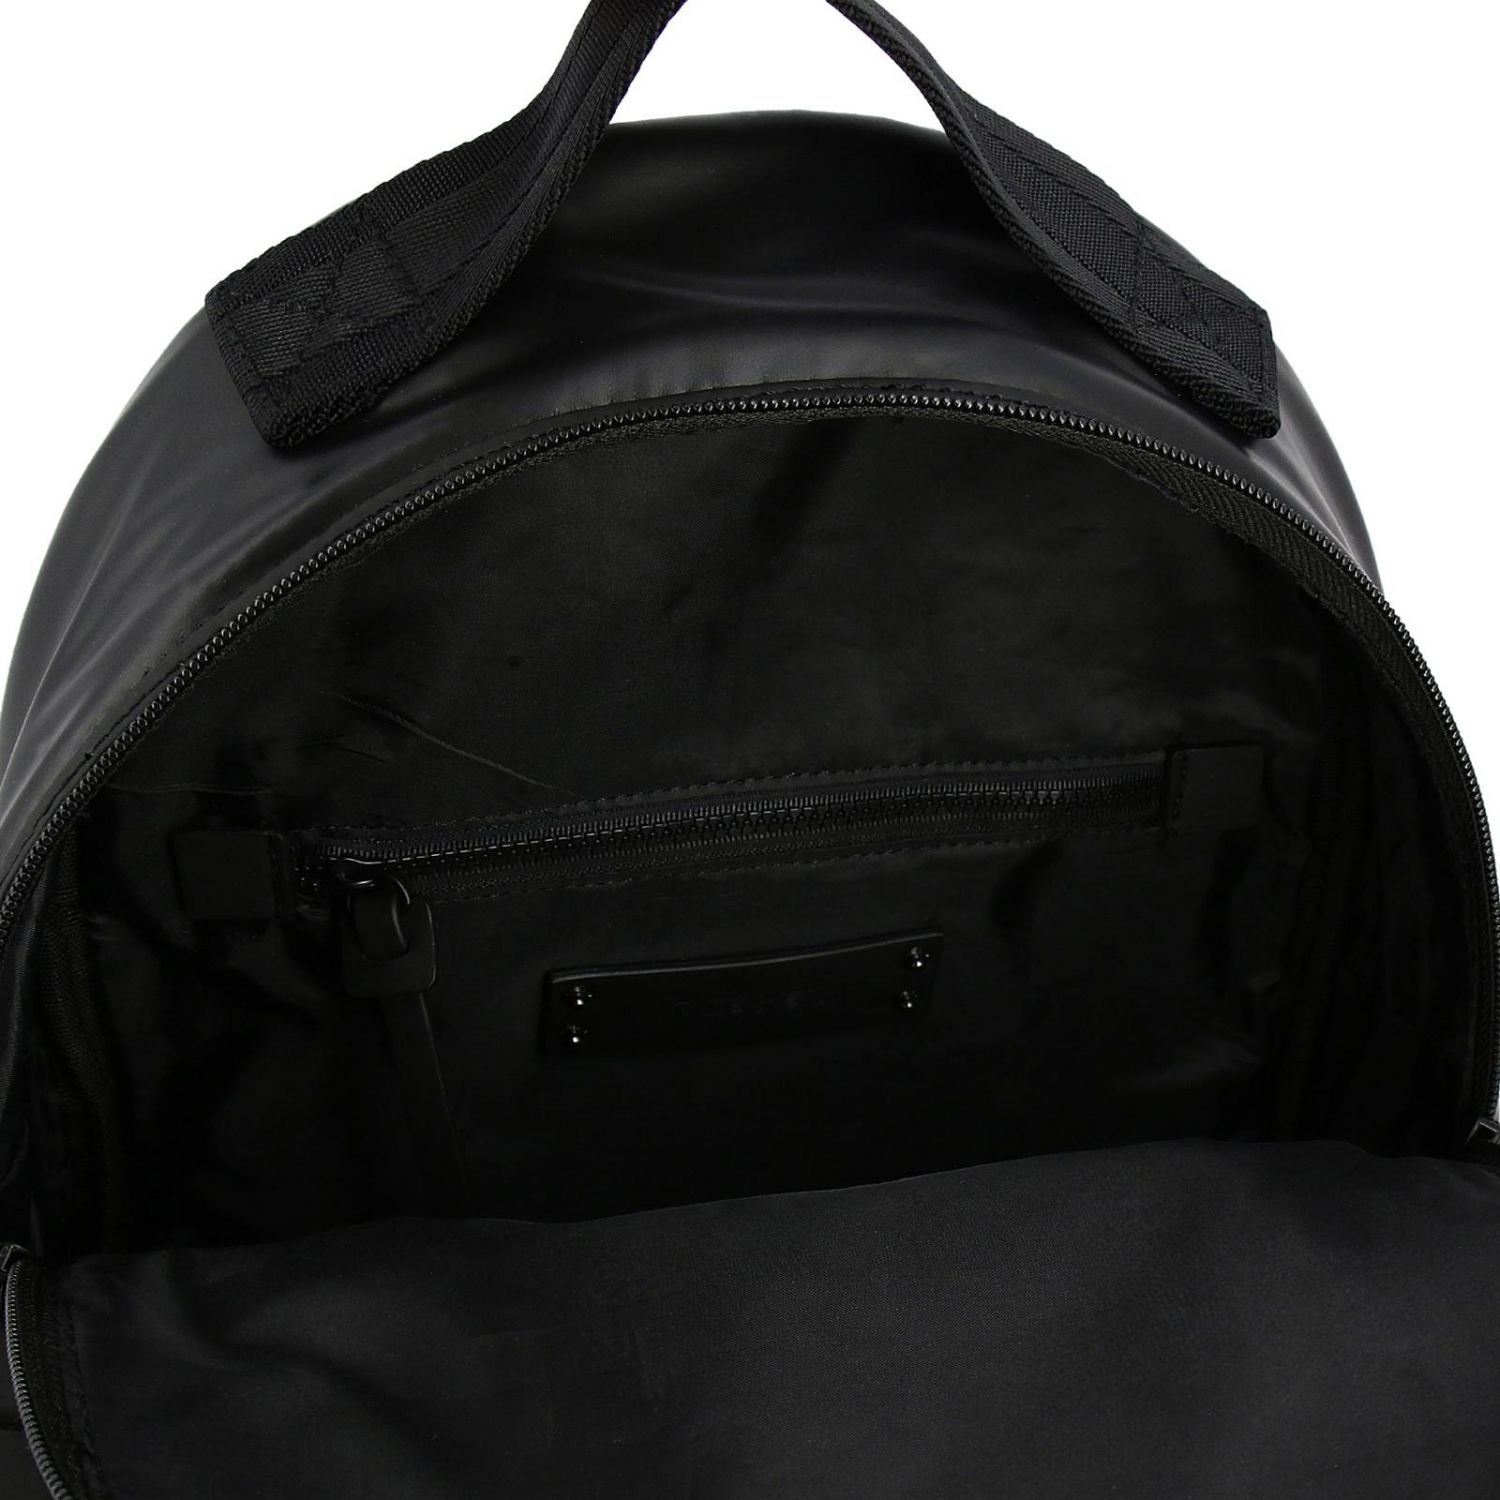 Diesel Outlet: Shoulder bag women | Backpack Diesel Women Black ...